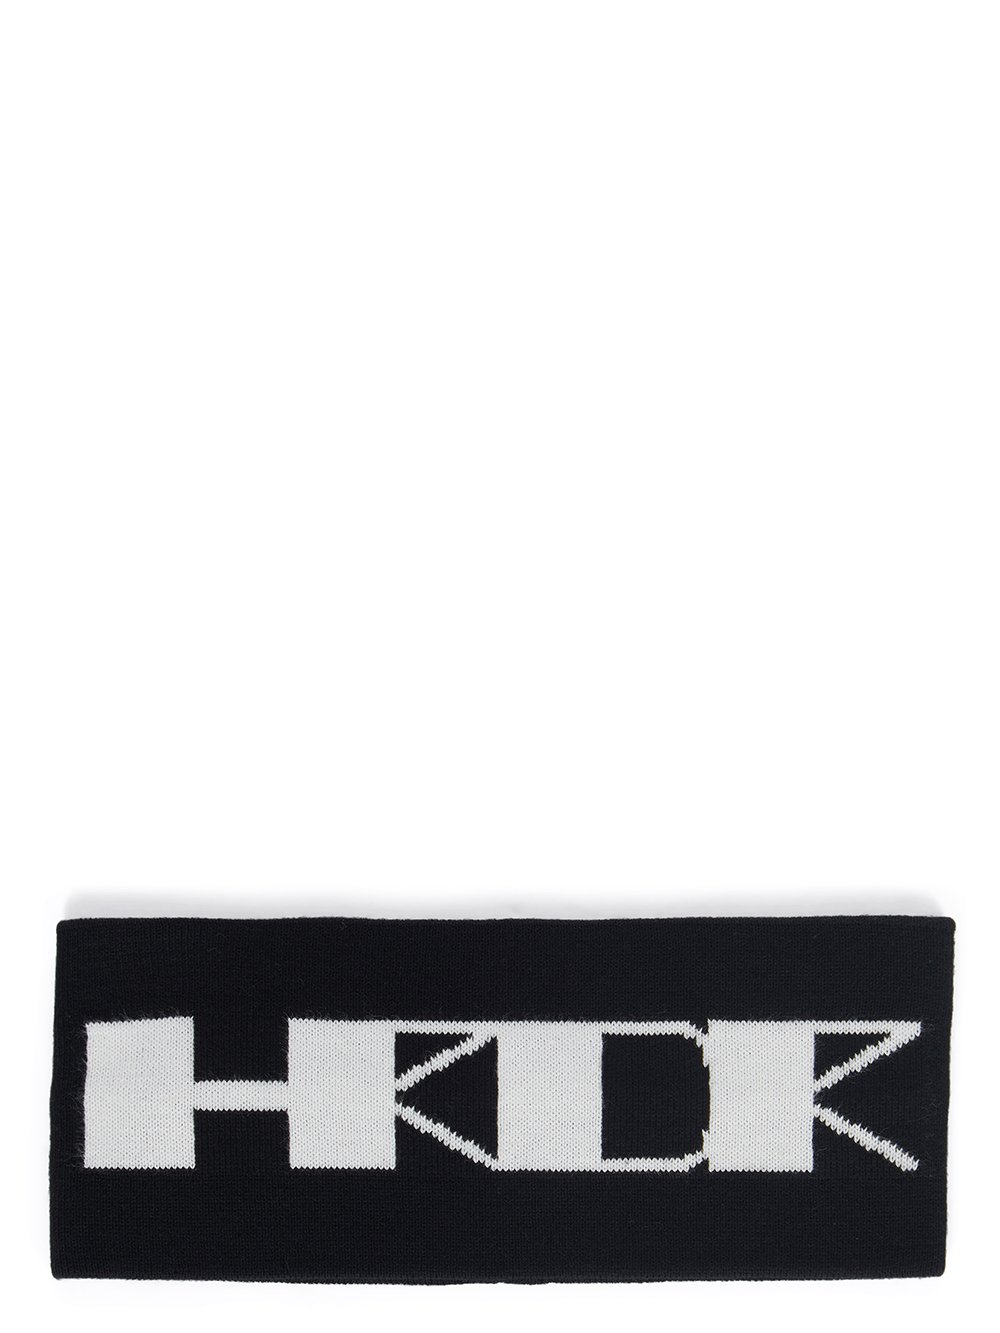 DRKSHDW FW23 LUXOR HRDR HEADBAND IN BLACK AND MILK COTTON KNIT